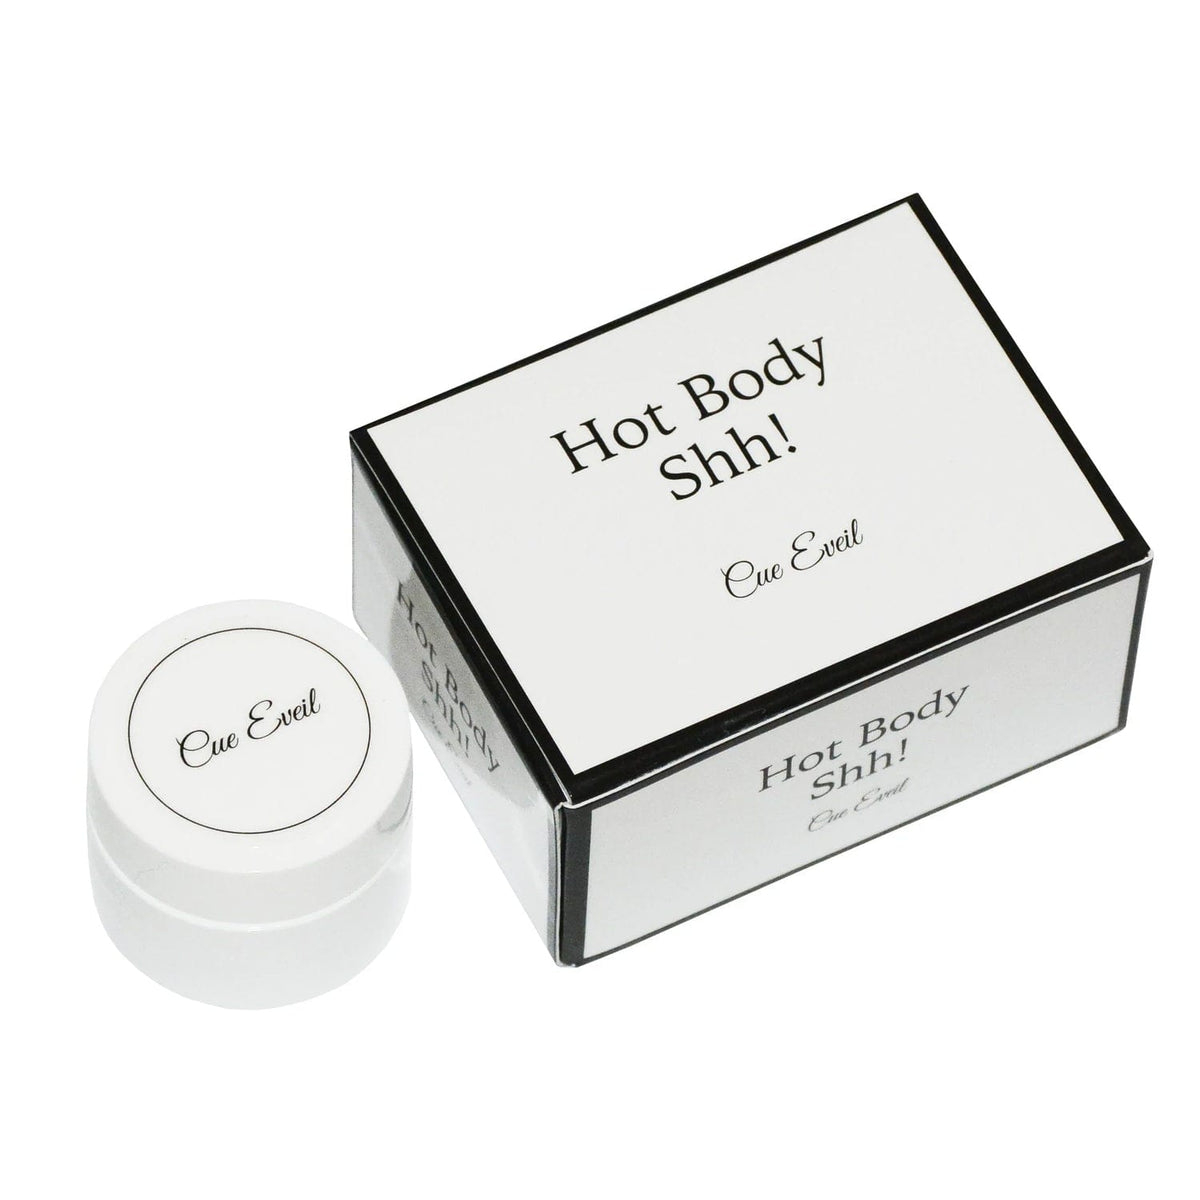 NPG - Hot Body Shh Cue Eveil Lovetime Exclusive Arousal Cream 5g -  Arousal Gel  Durio.sg